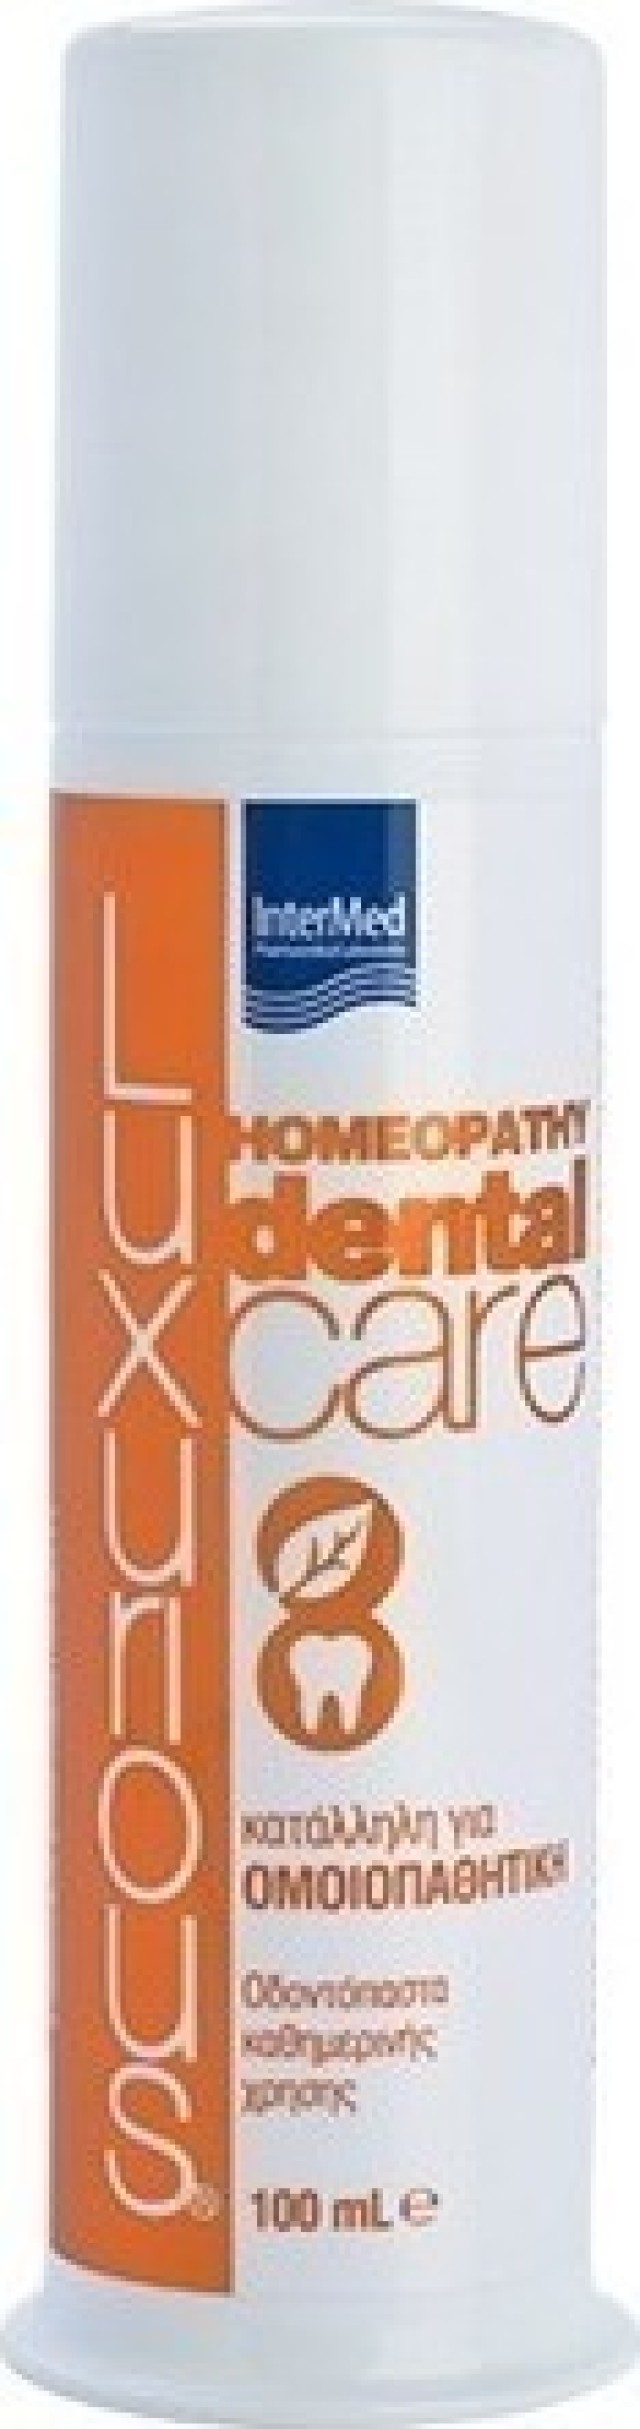 Intermed Luxurious Homeopathy Dental Care Οδοντόκρεμα 100ml